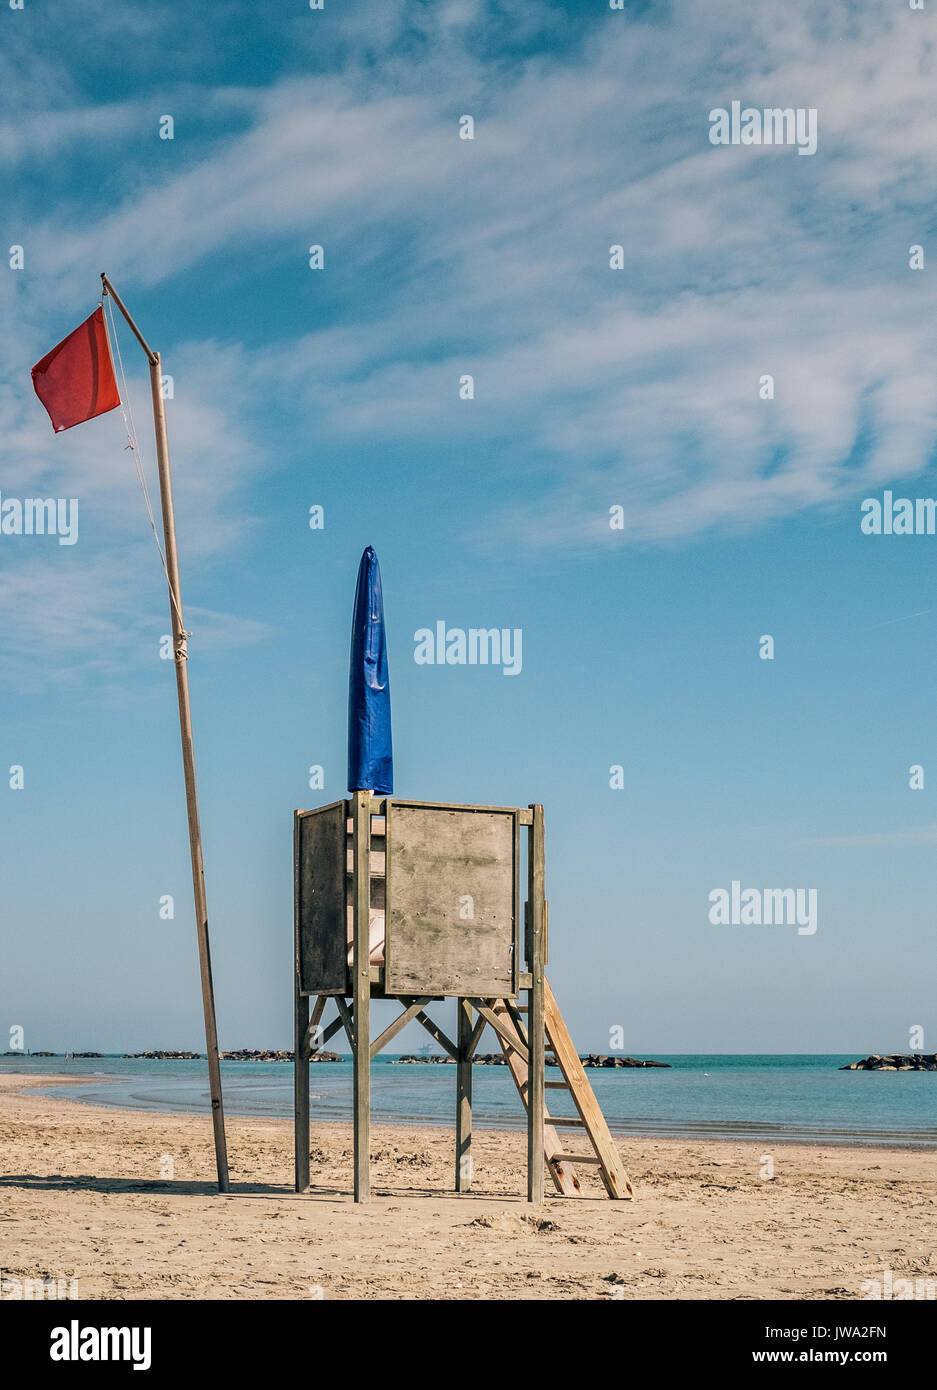 Life guard tower at Adriatic beach. Lido di Savio, Ravenna, Emilia Romagna, Italy. Stock Photo